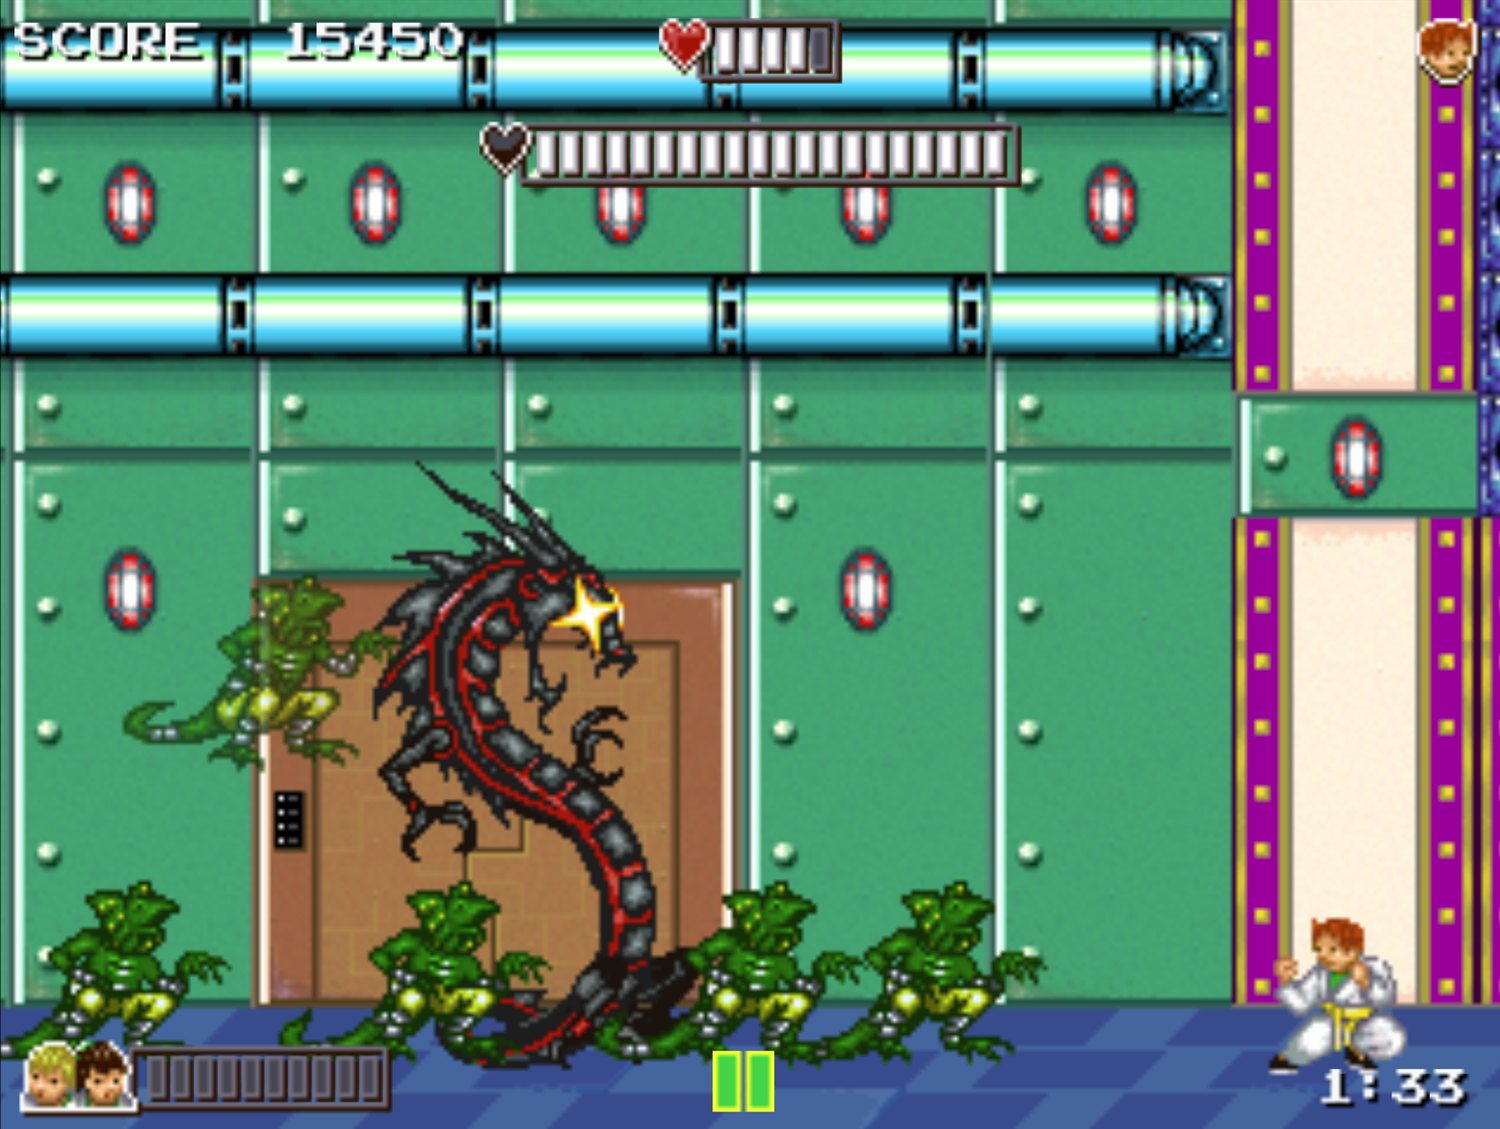 Kickin' It Black Dragon Blitz Game Final Boss Battle Screenshot.